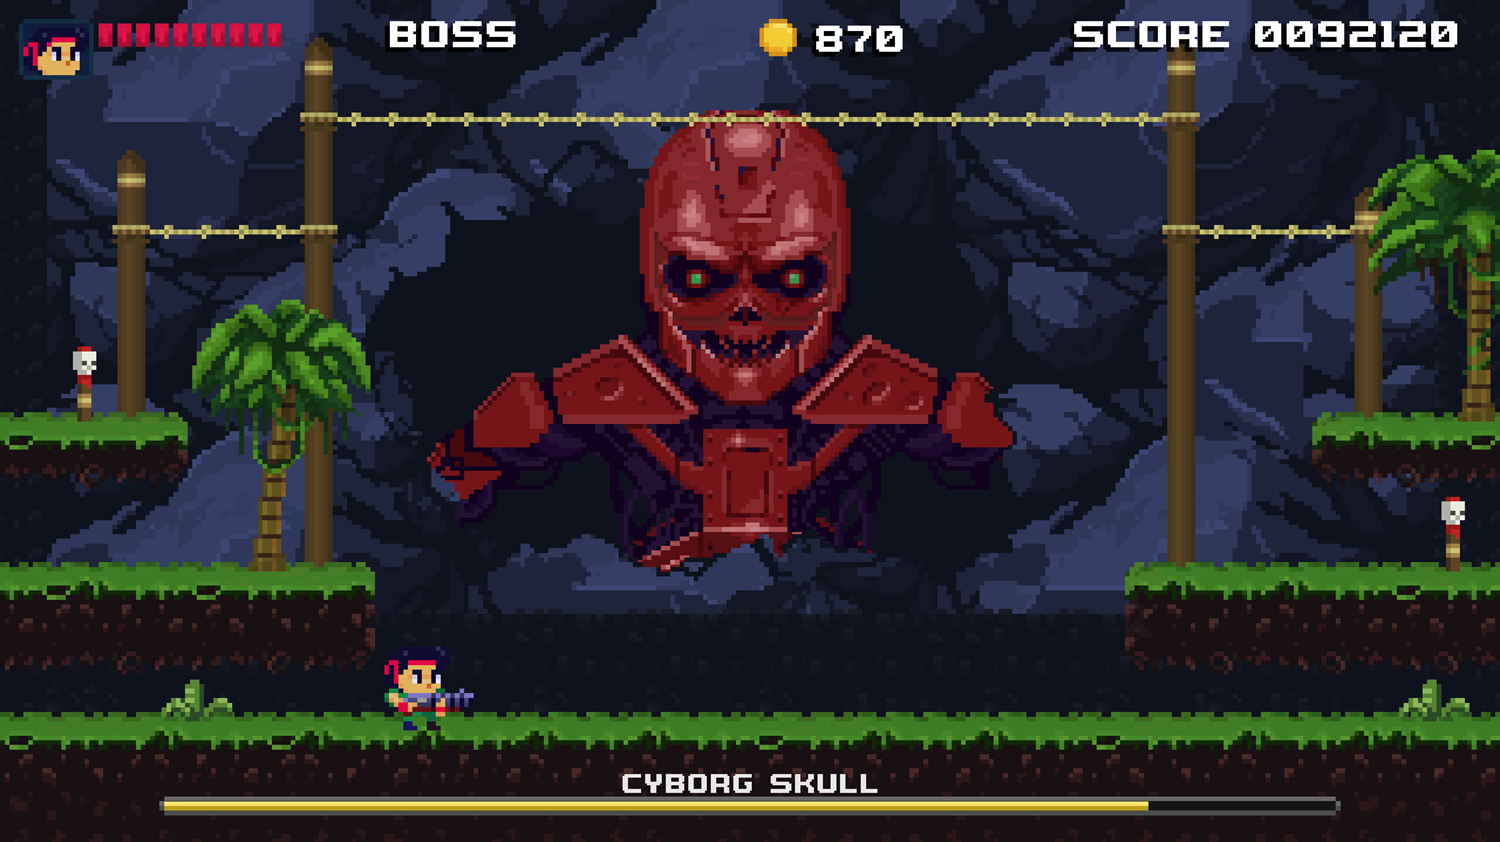 Brave Soldier Invasion of Cyborgs Game Boss Battle Screenshot.